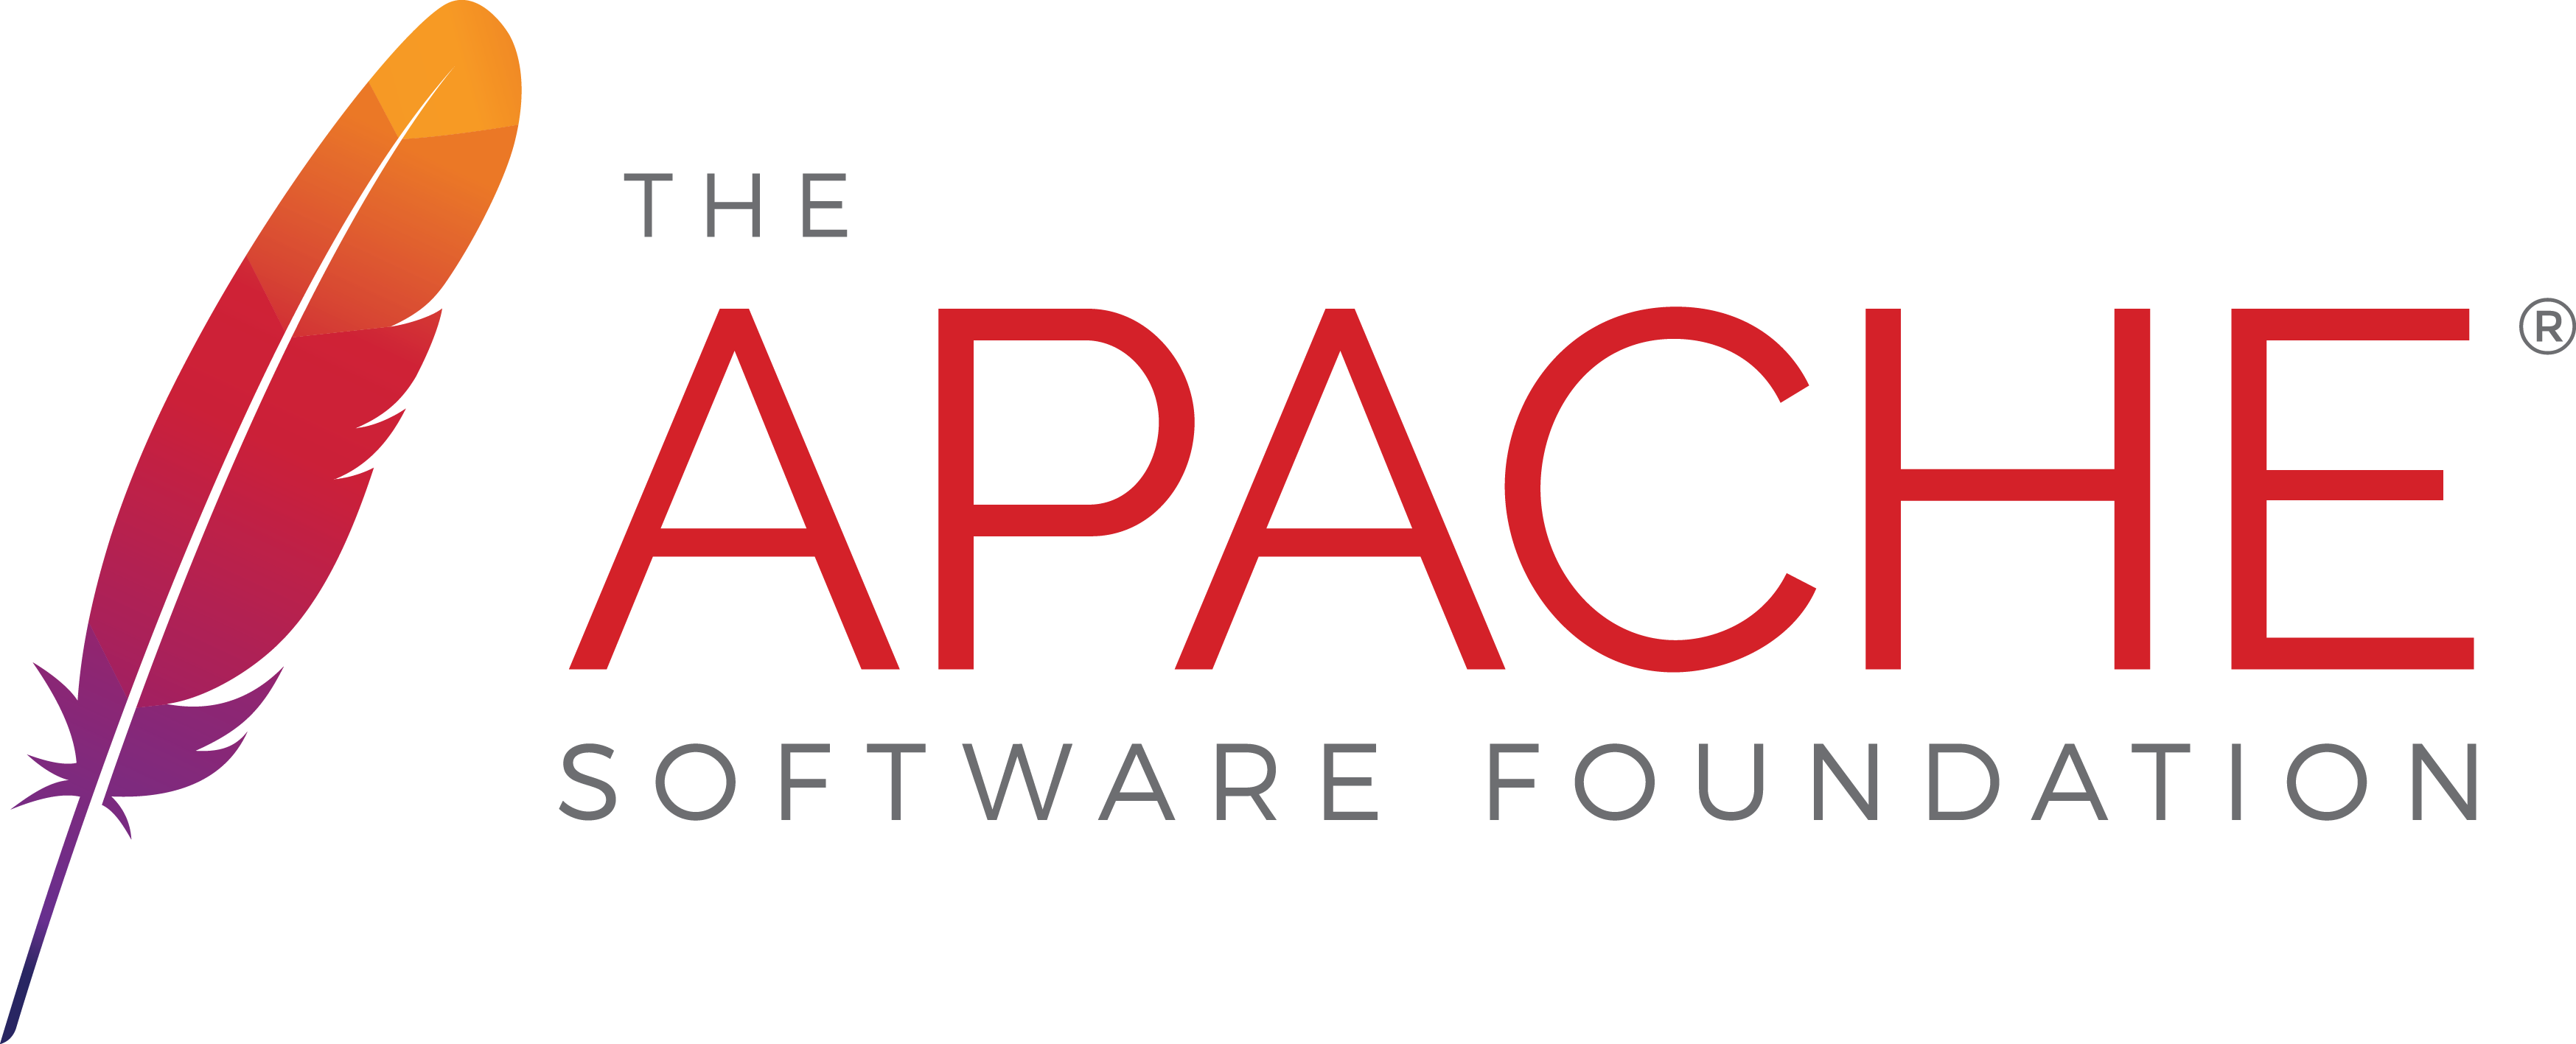 Apache Project Logos